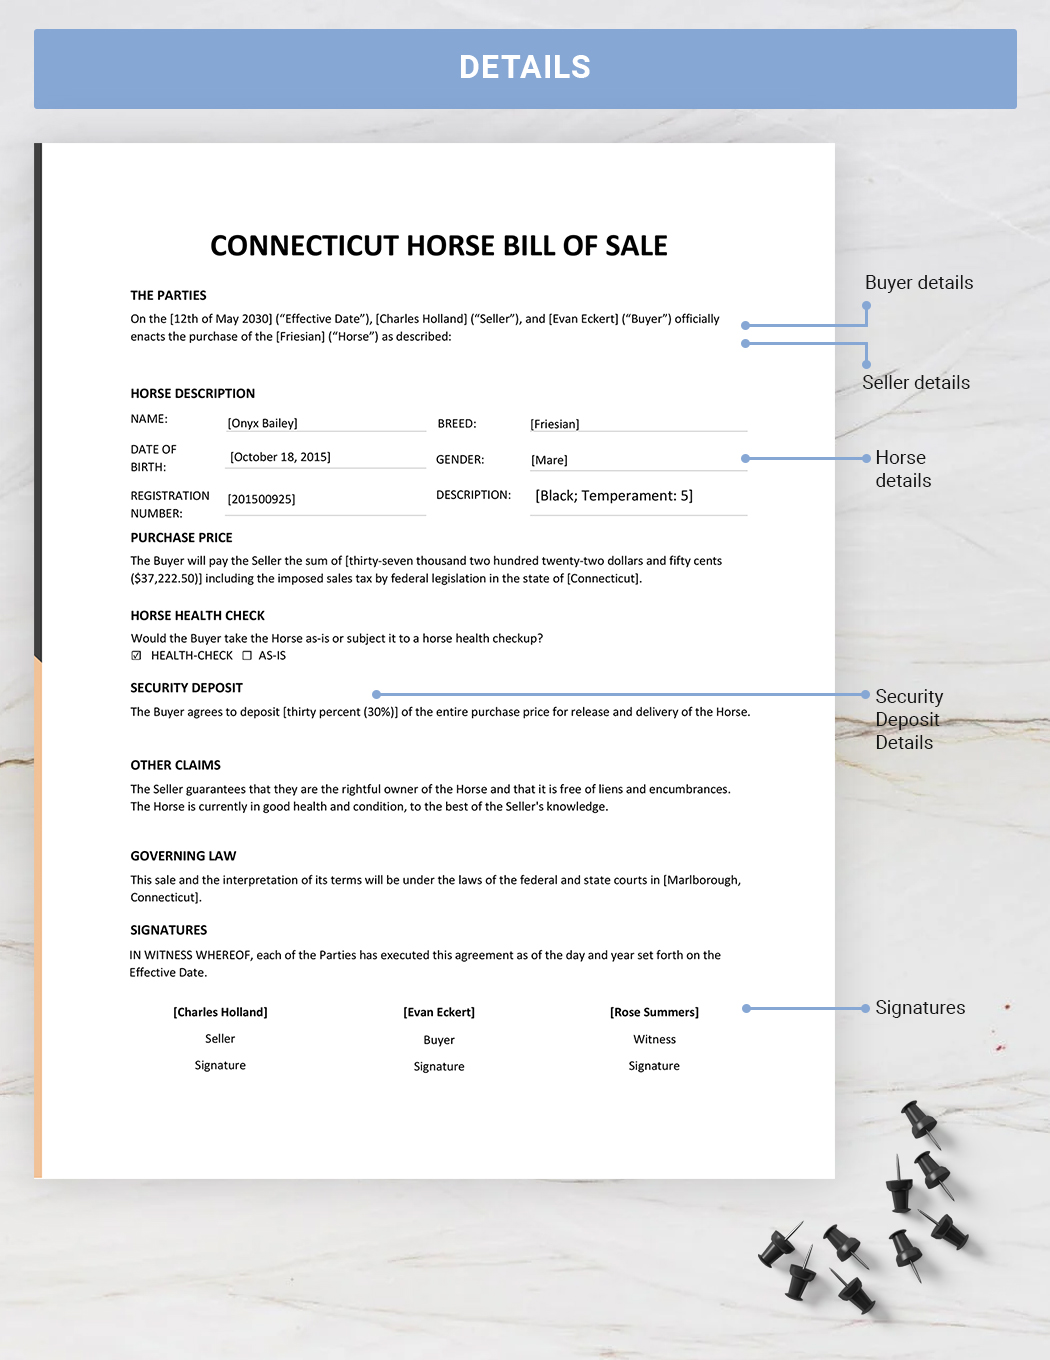 Connecticut Horse Bill of Sale Template